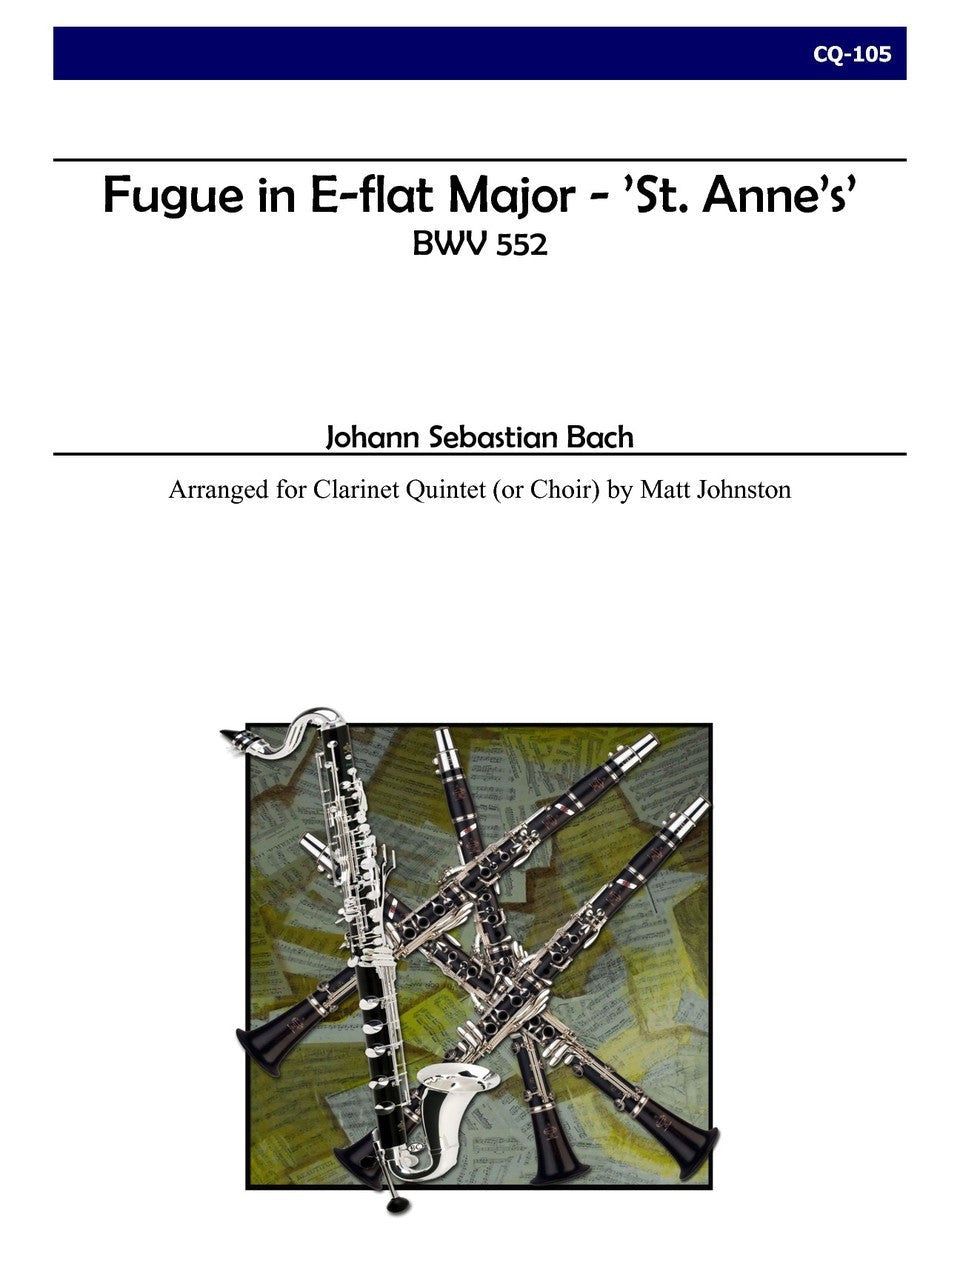 Bach (arr. Matt Johnston) - Fugue in E-flat Major — ’St. Anne’s’ for Clarinet Quintet